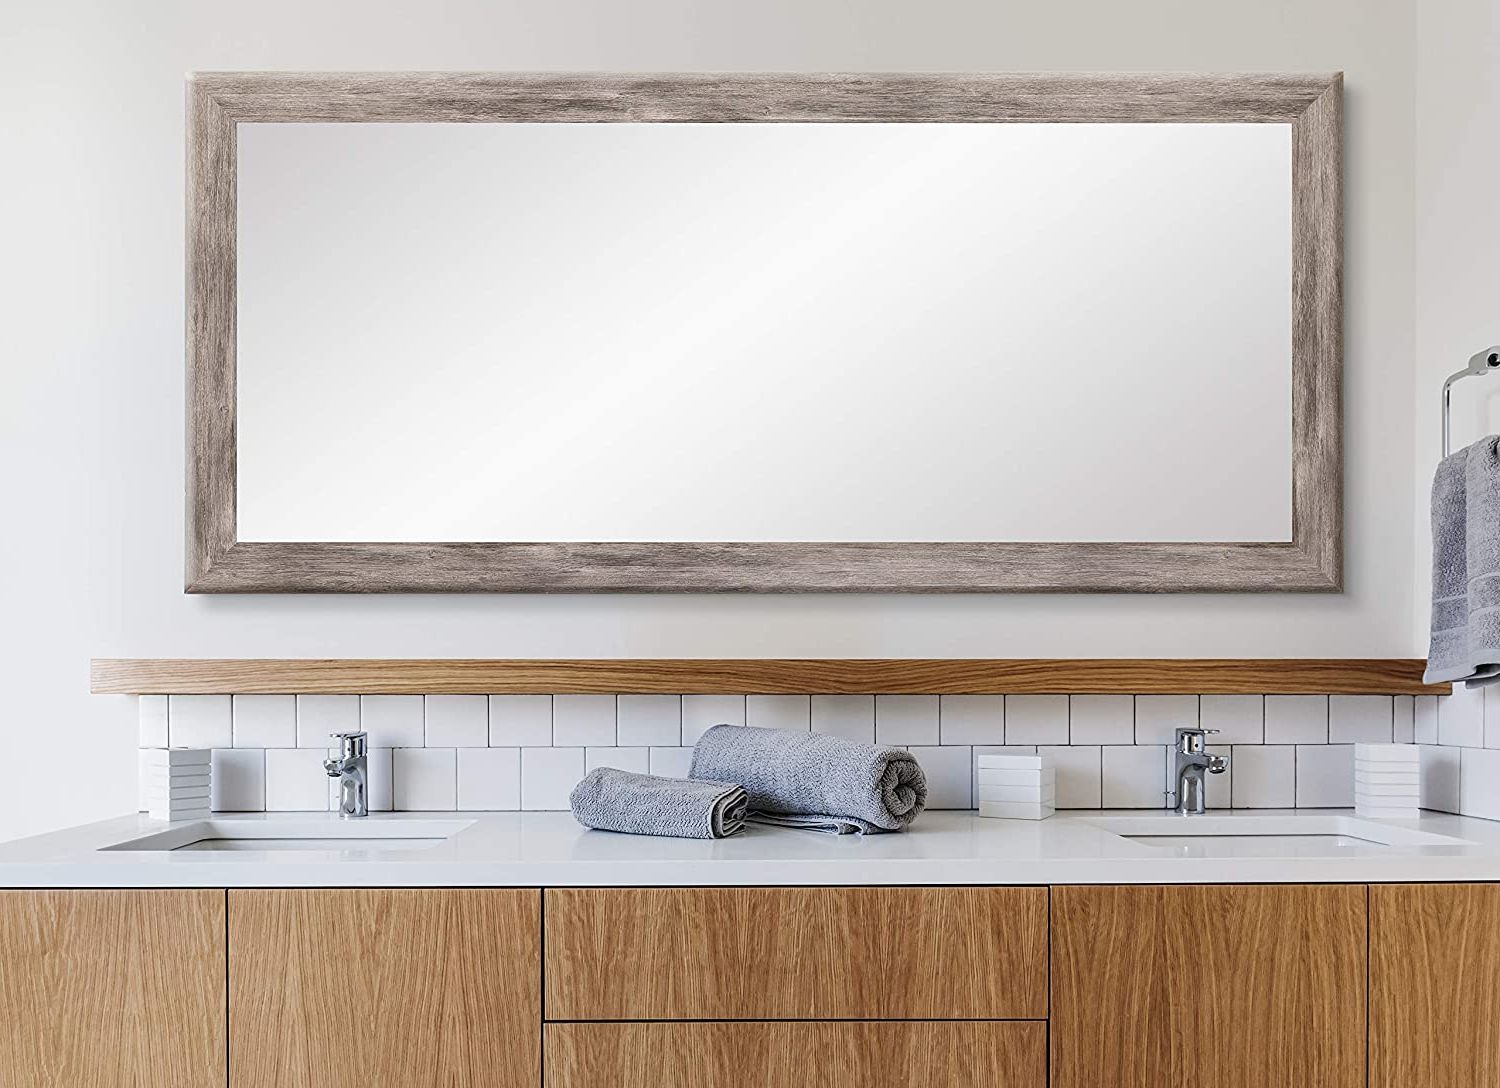 Brandtworks Bm035t Barn Wood Full Length Floor Vanity Wall Mirror, 33 For Preferred Full Length Floor Mirrors (View 15 of 15)